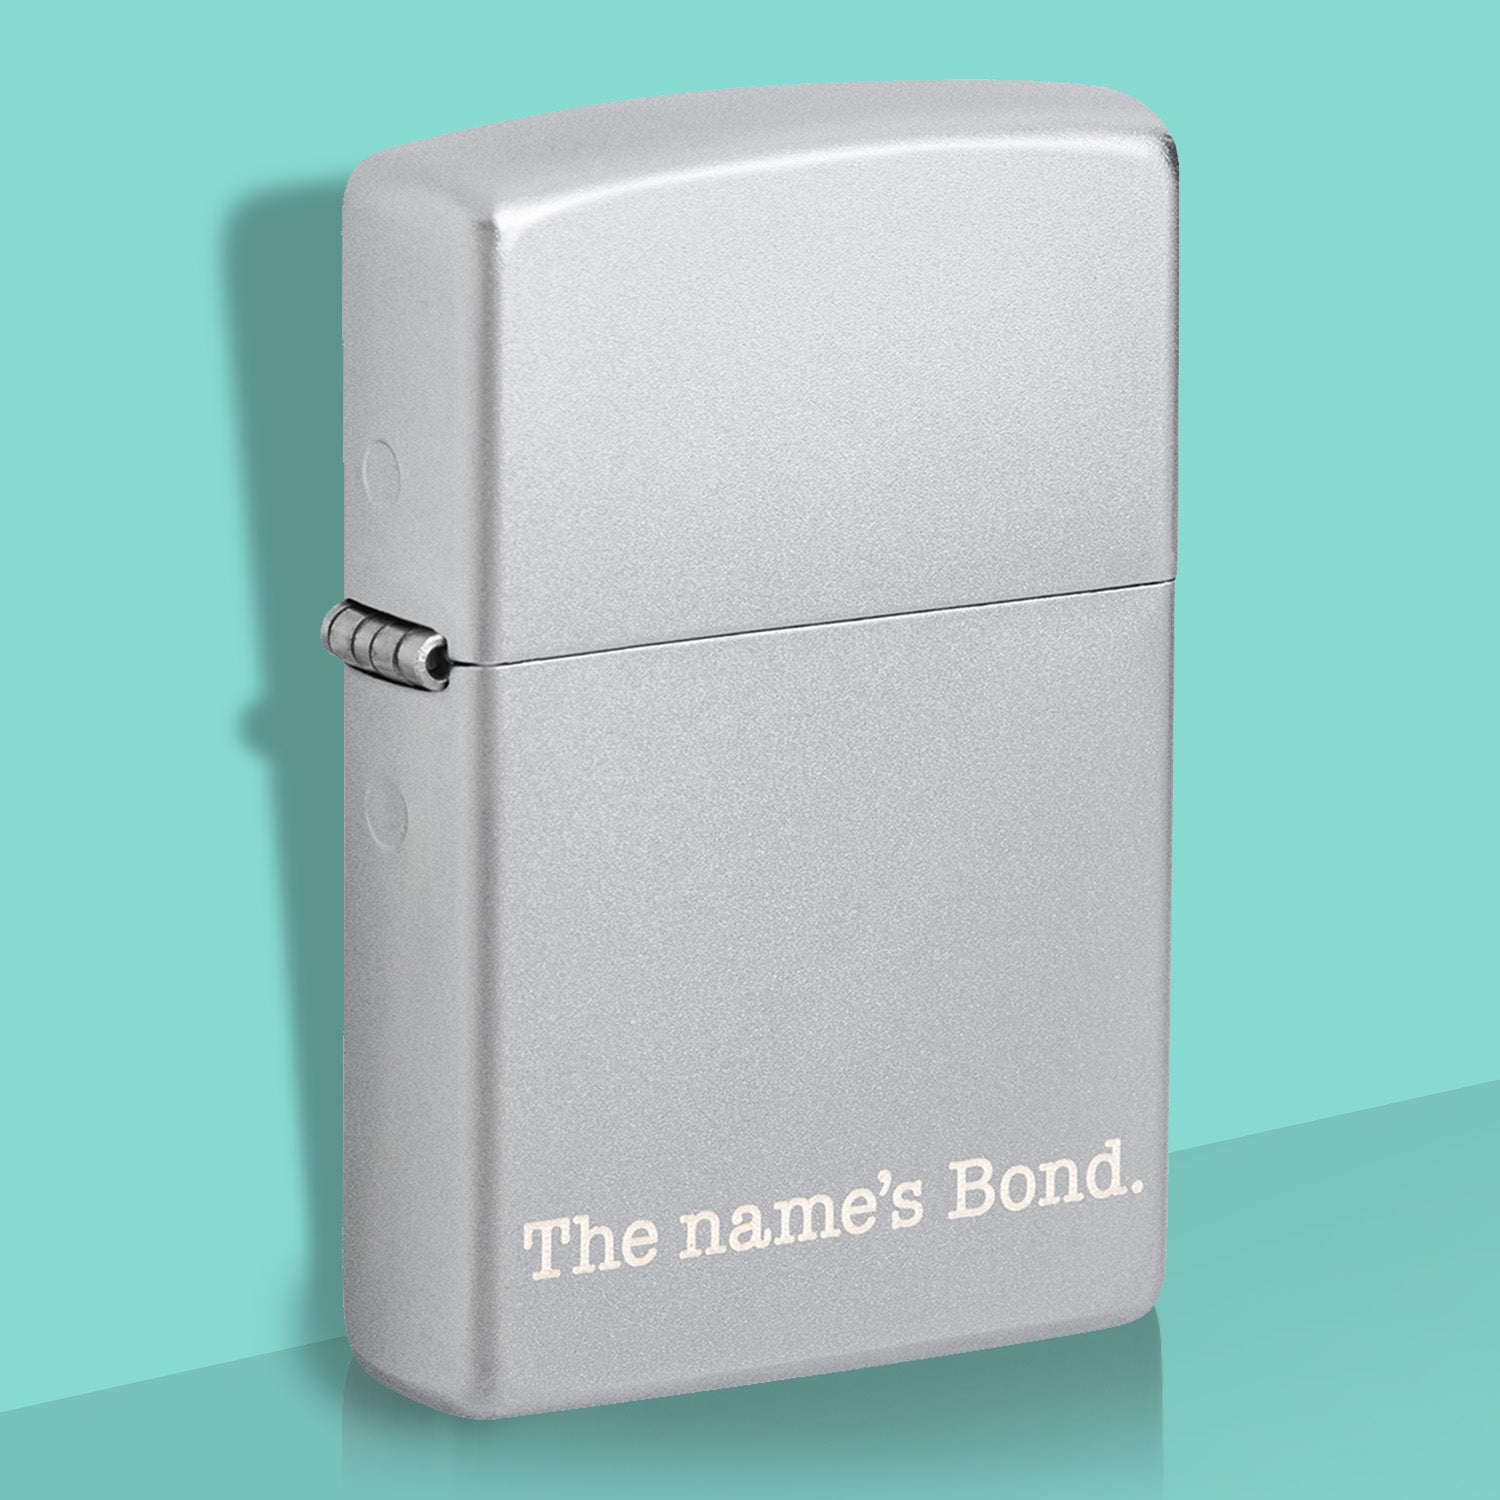 James Bond Zippo Lighter - "The Name's Bond" Edition